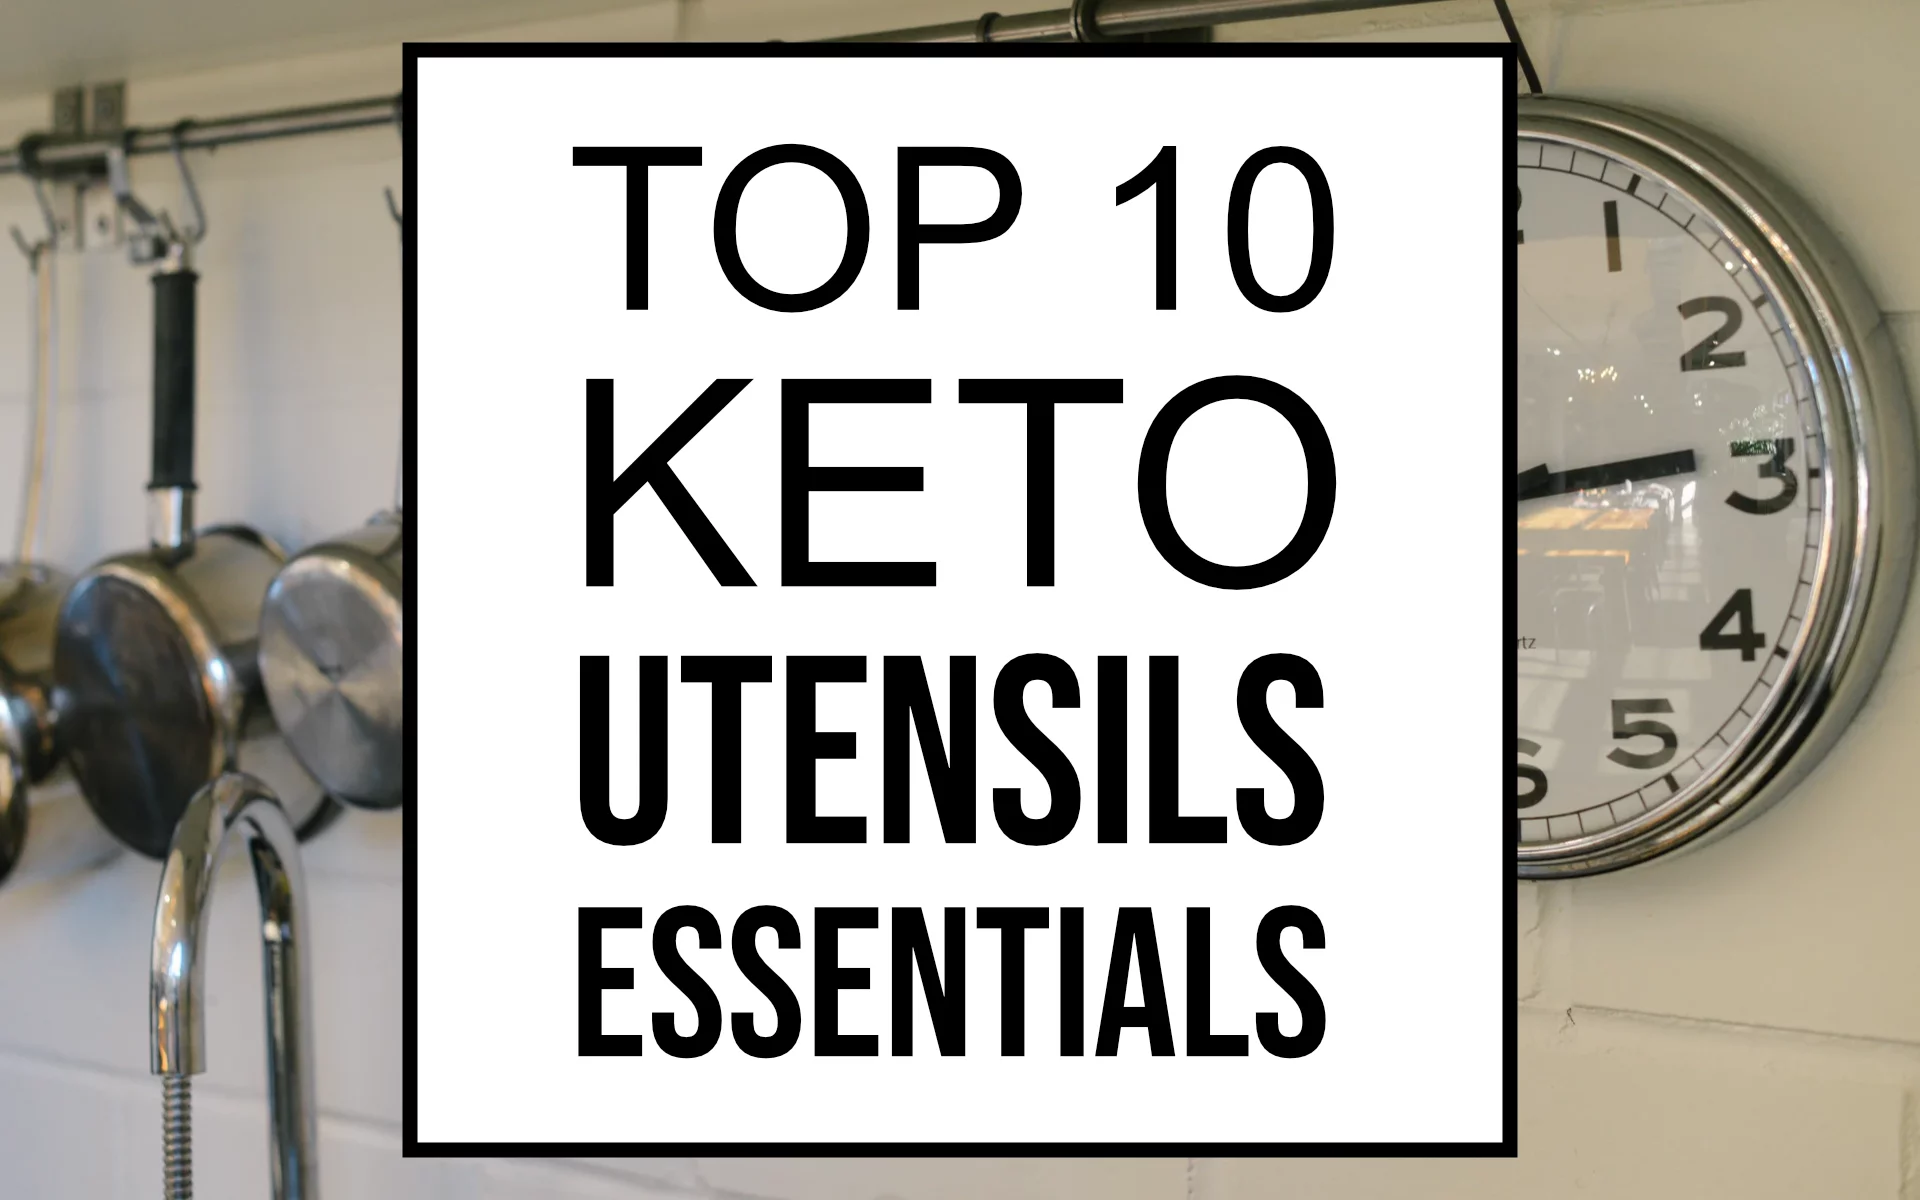 top 10 keto utensils essentials